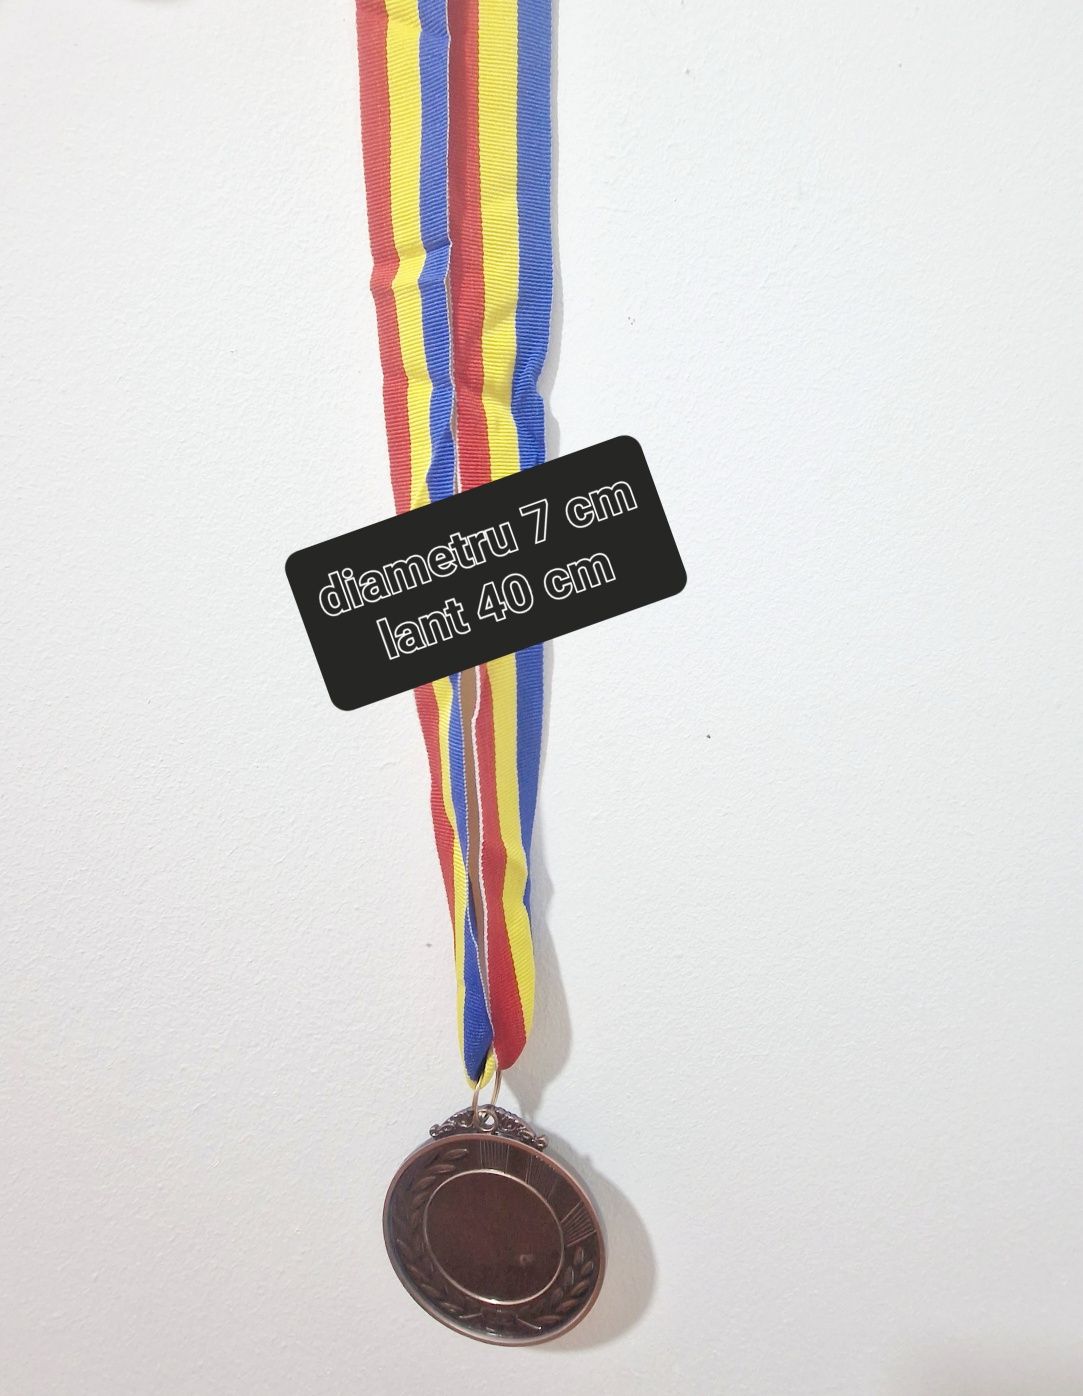 Medalie de bronz 7 cm lant 40 cm